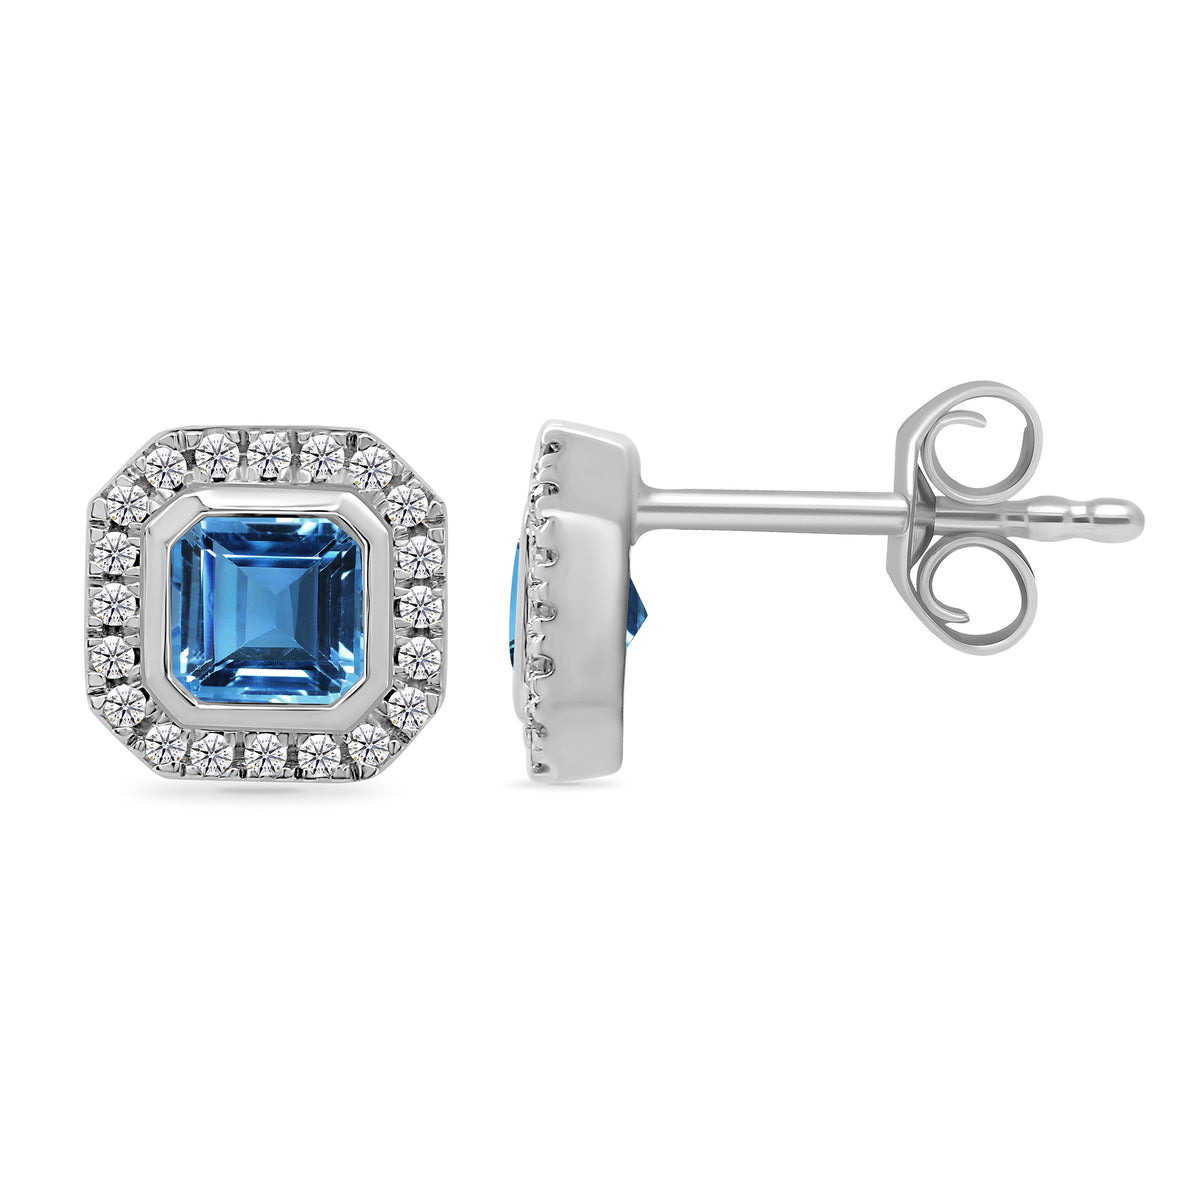 9ct white gold 4mm square blue topaz &amp; diamond cluster stud earrings 0.13ct